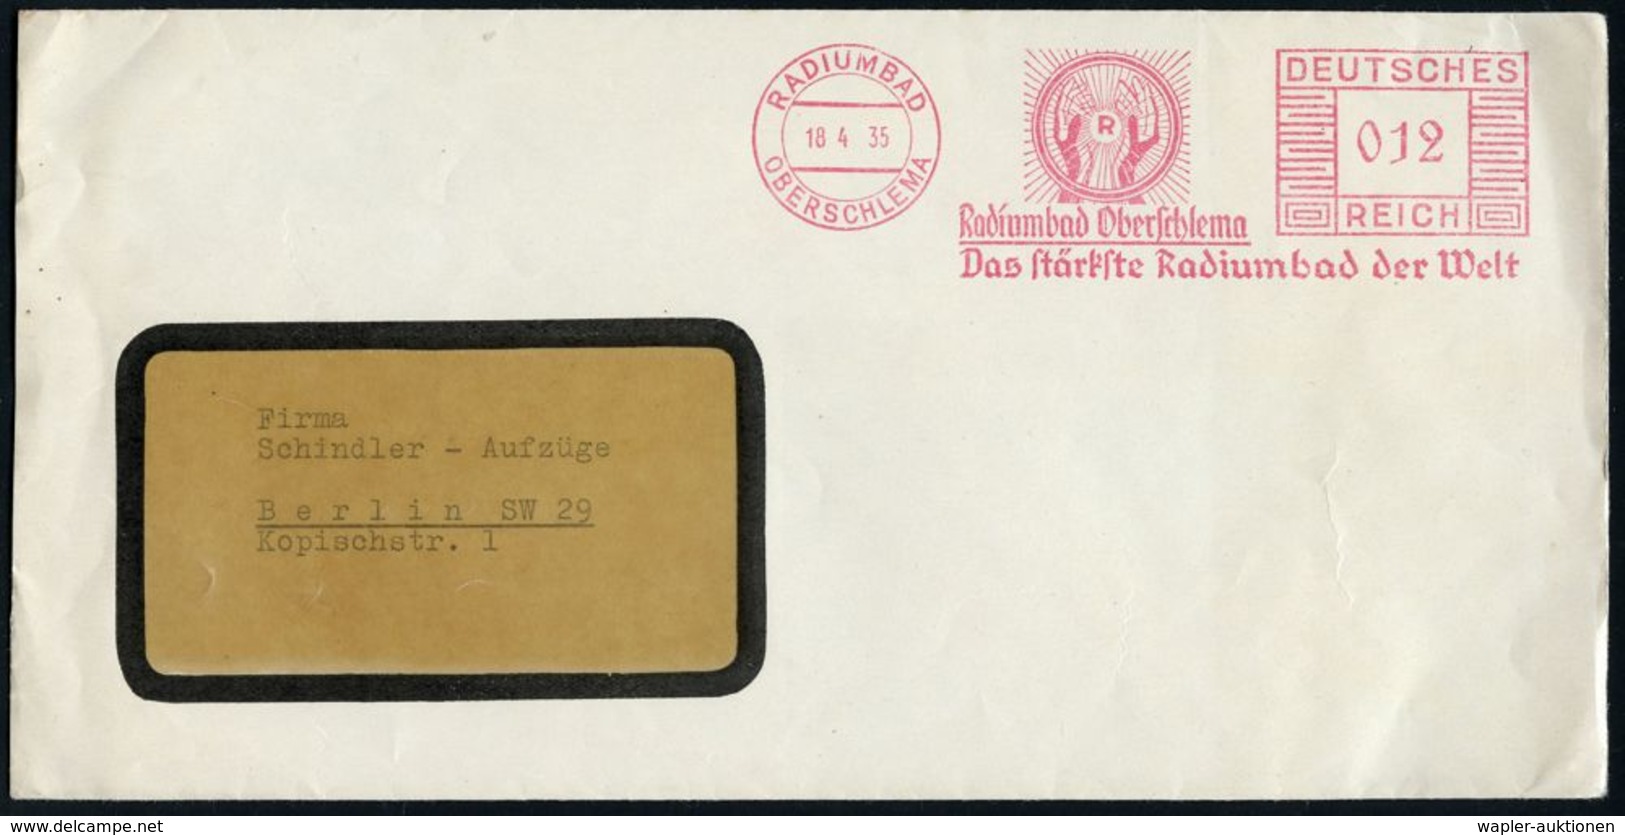 ATOM / KERNENERGIE / RÖNTGEN / RADIOAKTIVITÄT : OBERSCHLEMA RADIUMBAD/ Das Stärkste Radiumbad Der Welt 1935 (18.4.) Selt - Atomenergie